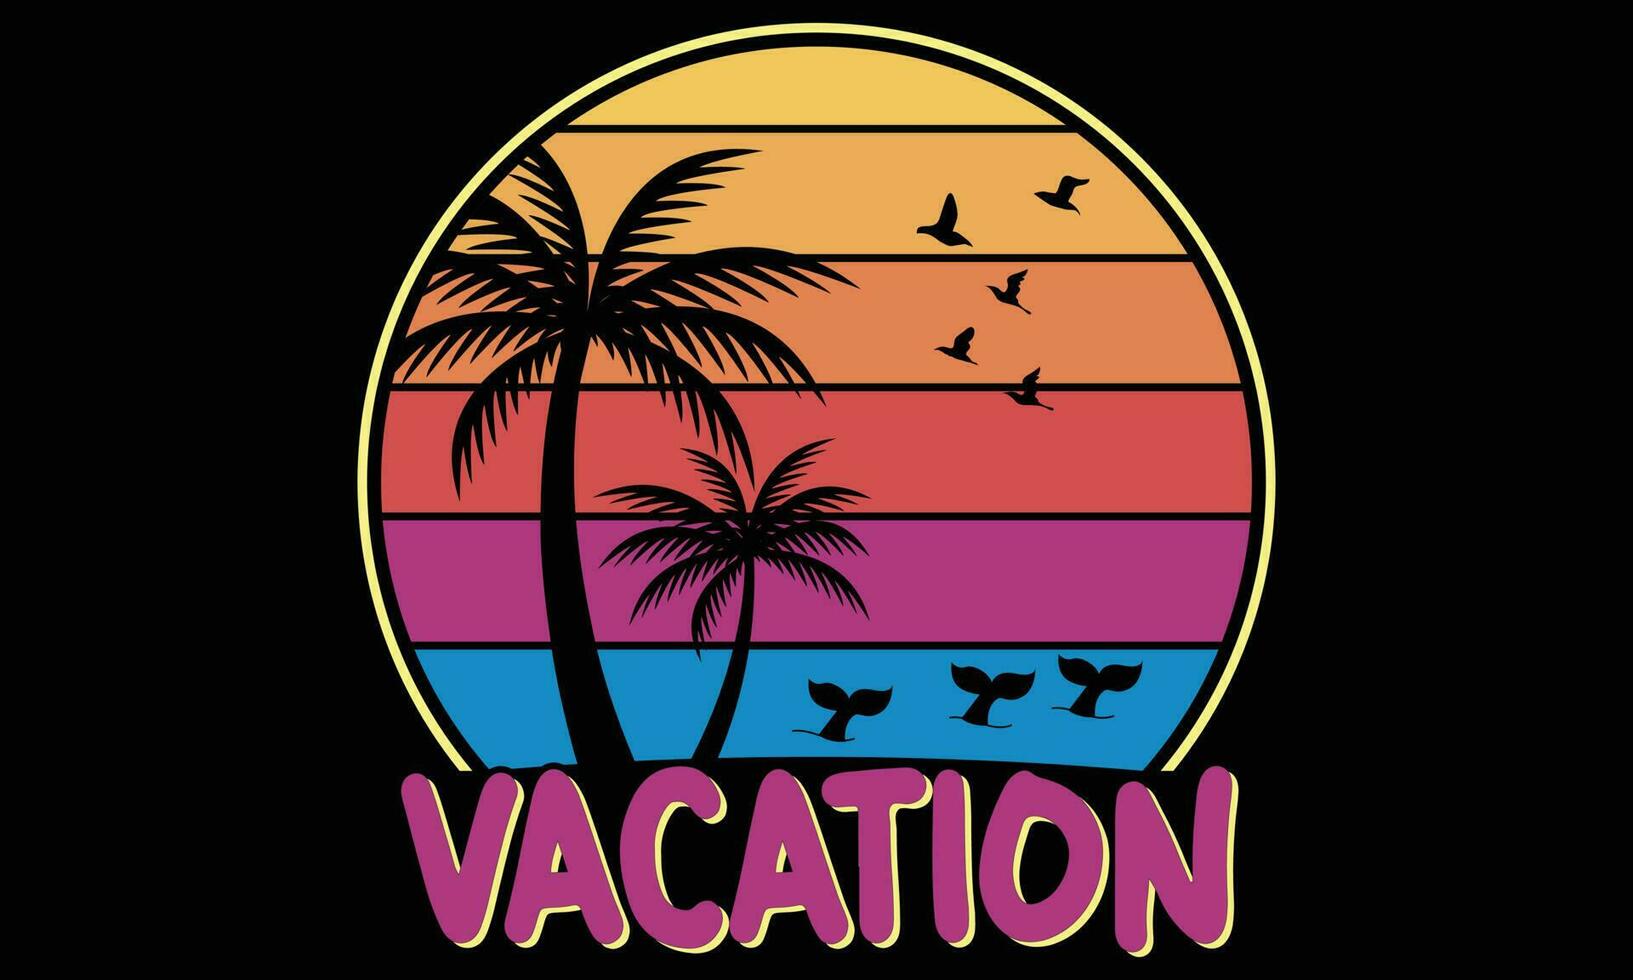 Summer Vacation Loading T-shirt Design Vector, Summer beach Sunshine Vector Print Design Artwork, Take Me To The Sunshine, Beach Paradise Print T-shirt Graphics Design, typography Slogan On Palm Tree